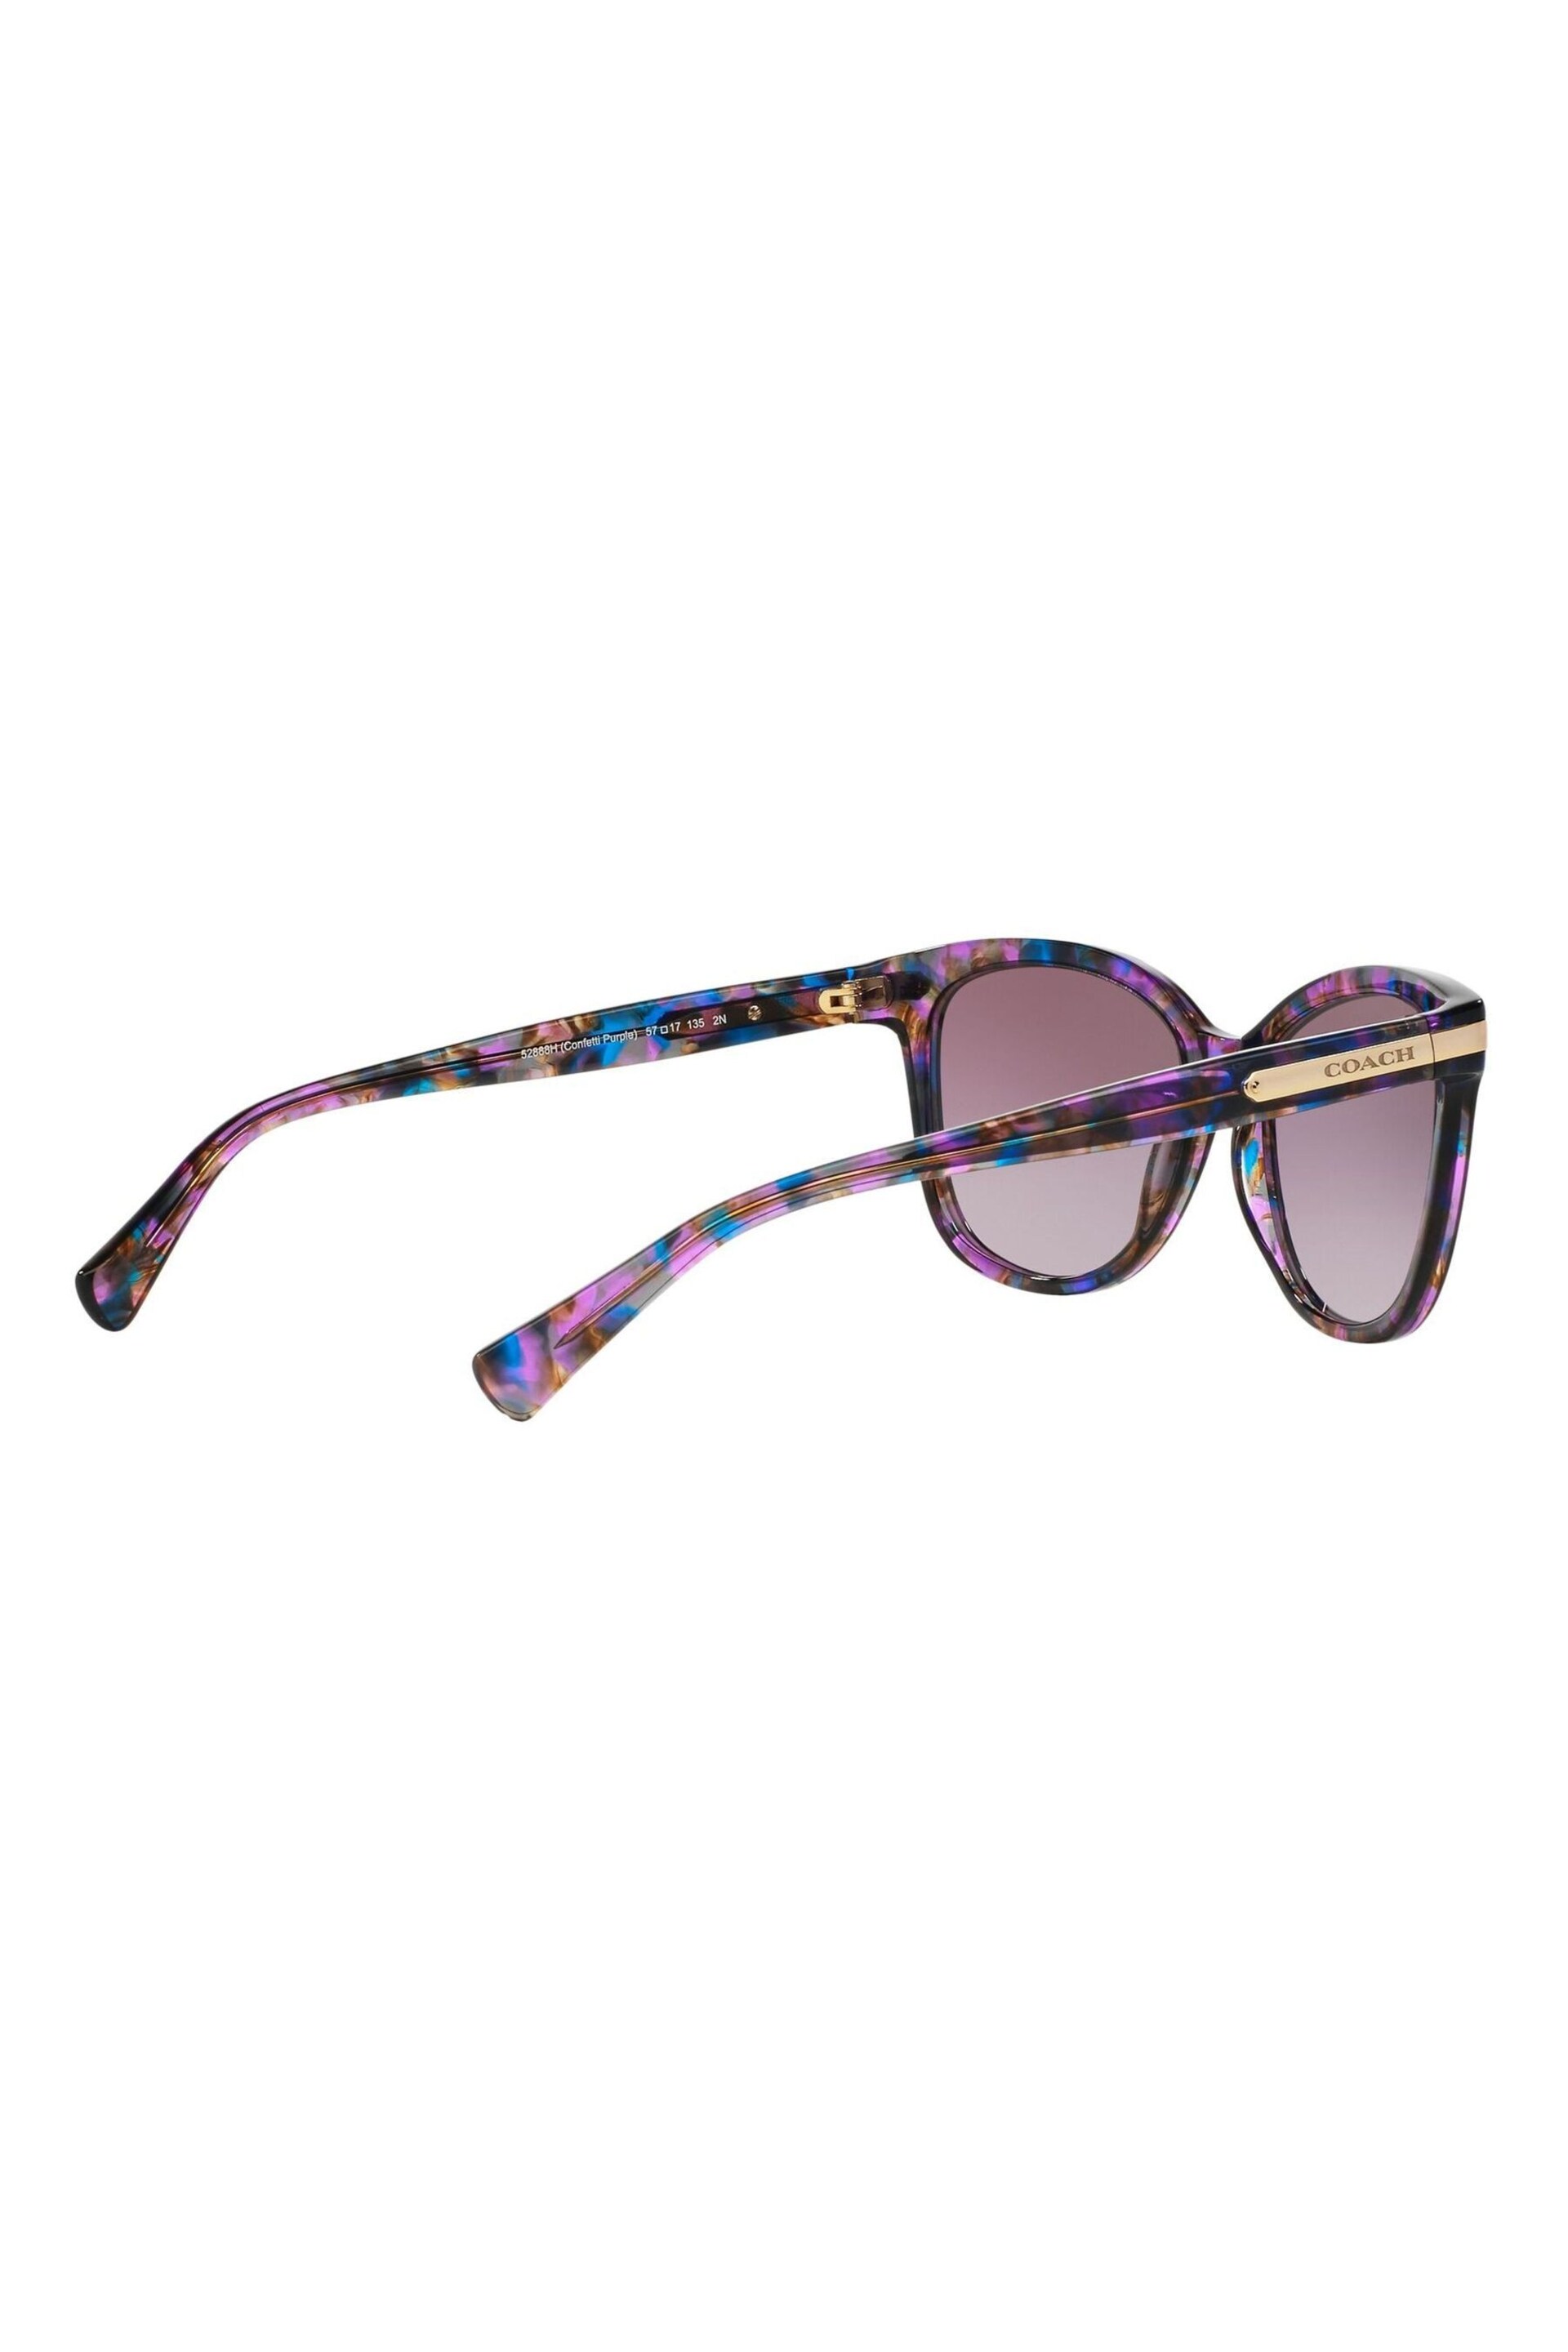 COACH Purple Sunglasses - Image 7 of 12